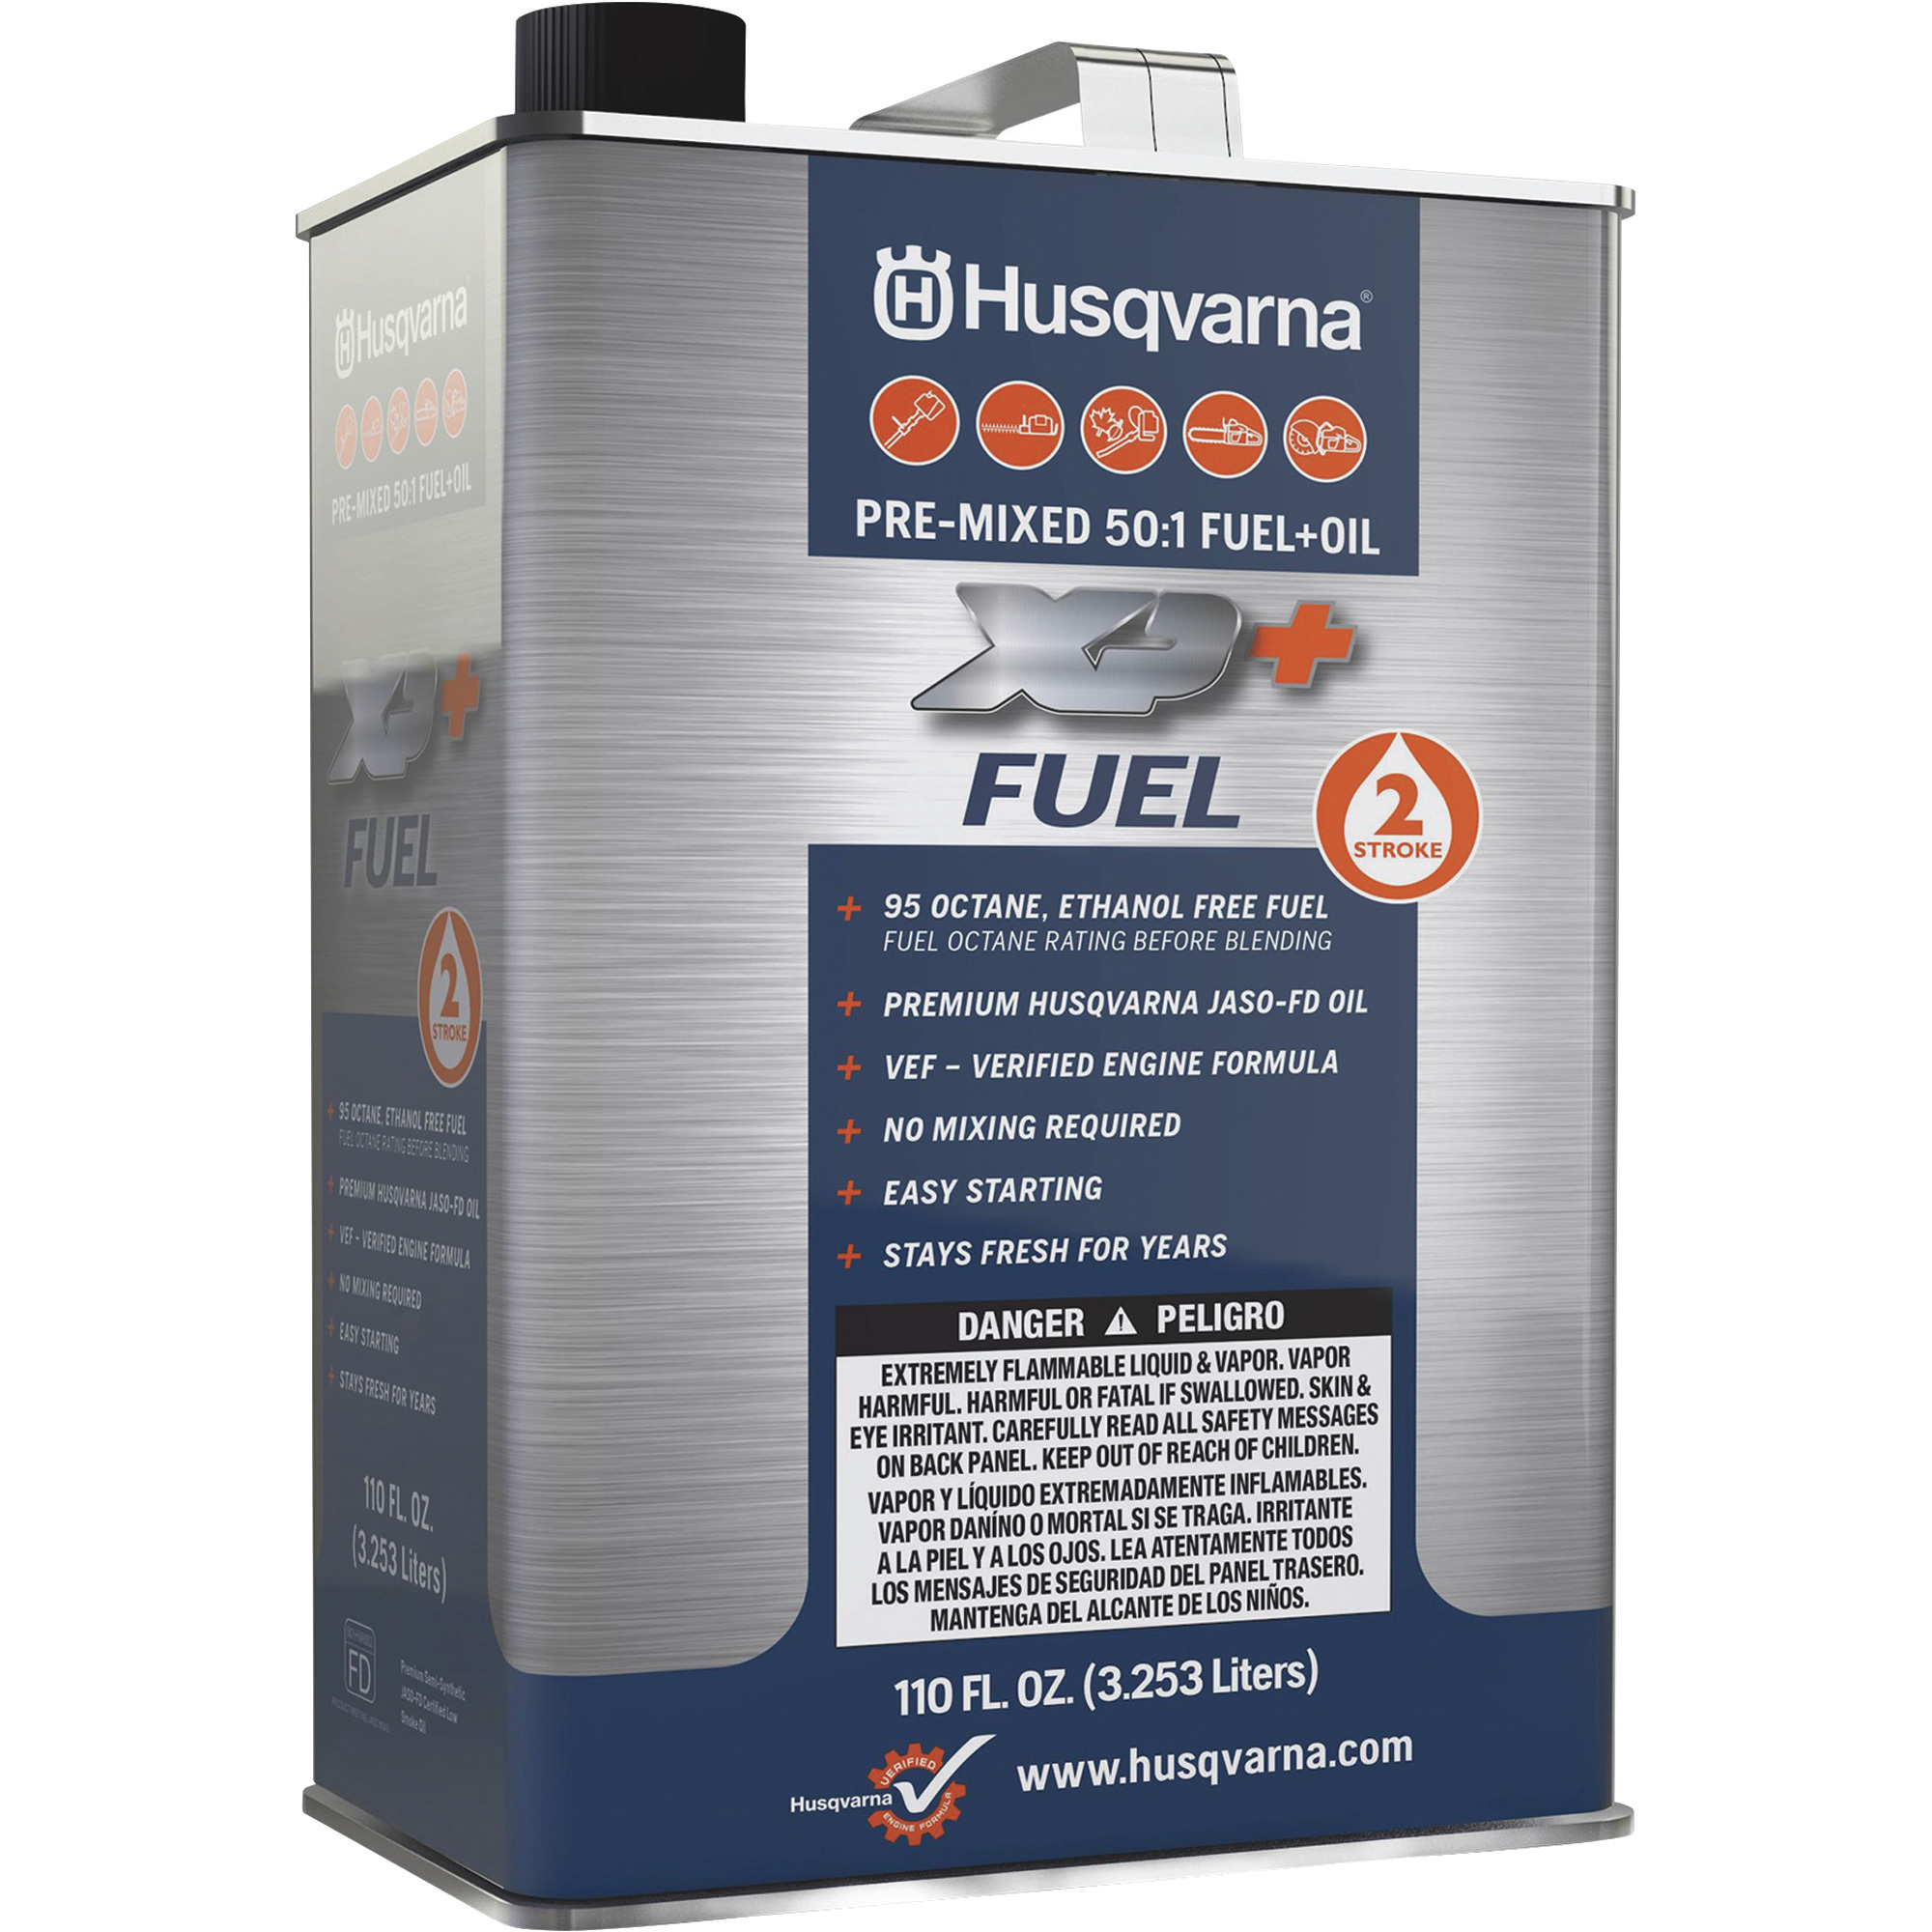 Husqvarna XP Pre-Mixed Fuel and Oil â 50:1 Ratio, 1-Gallon. Can